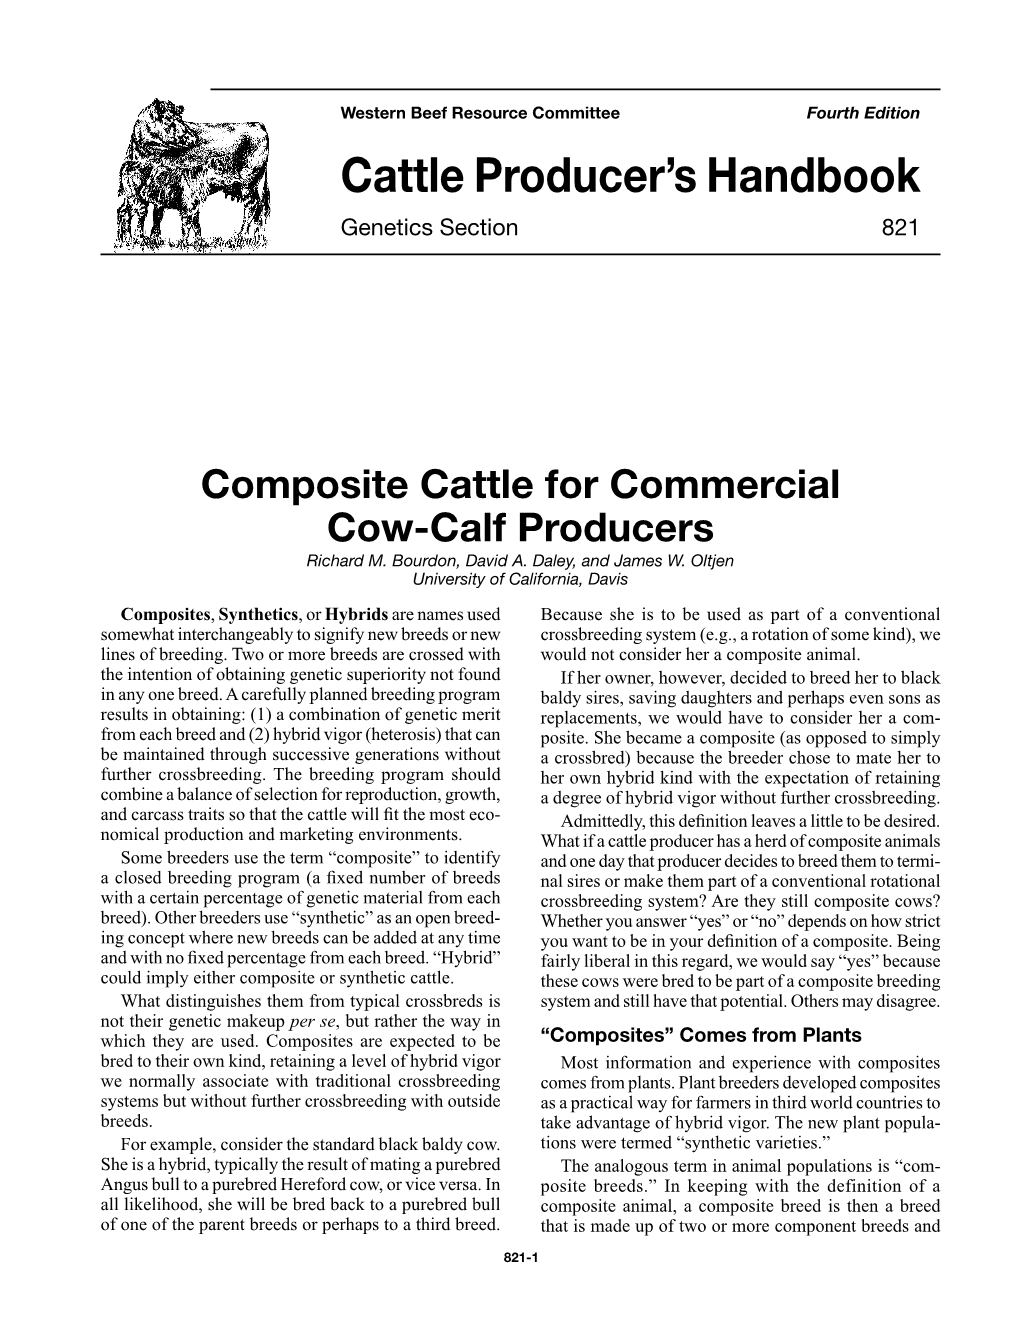 Cattle Producer's Handbook